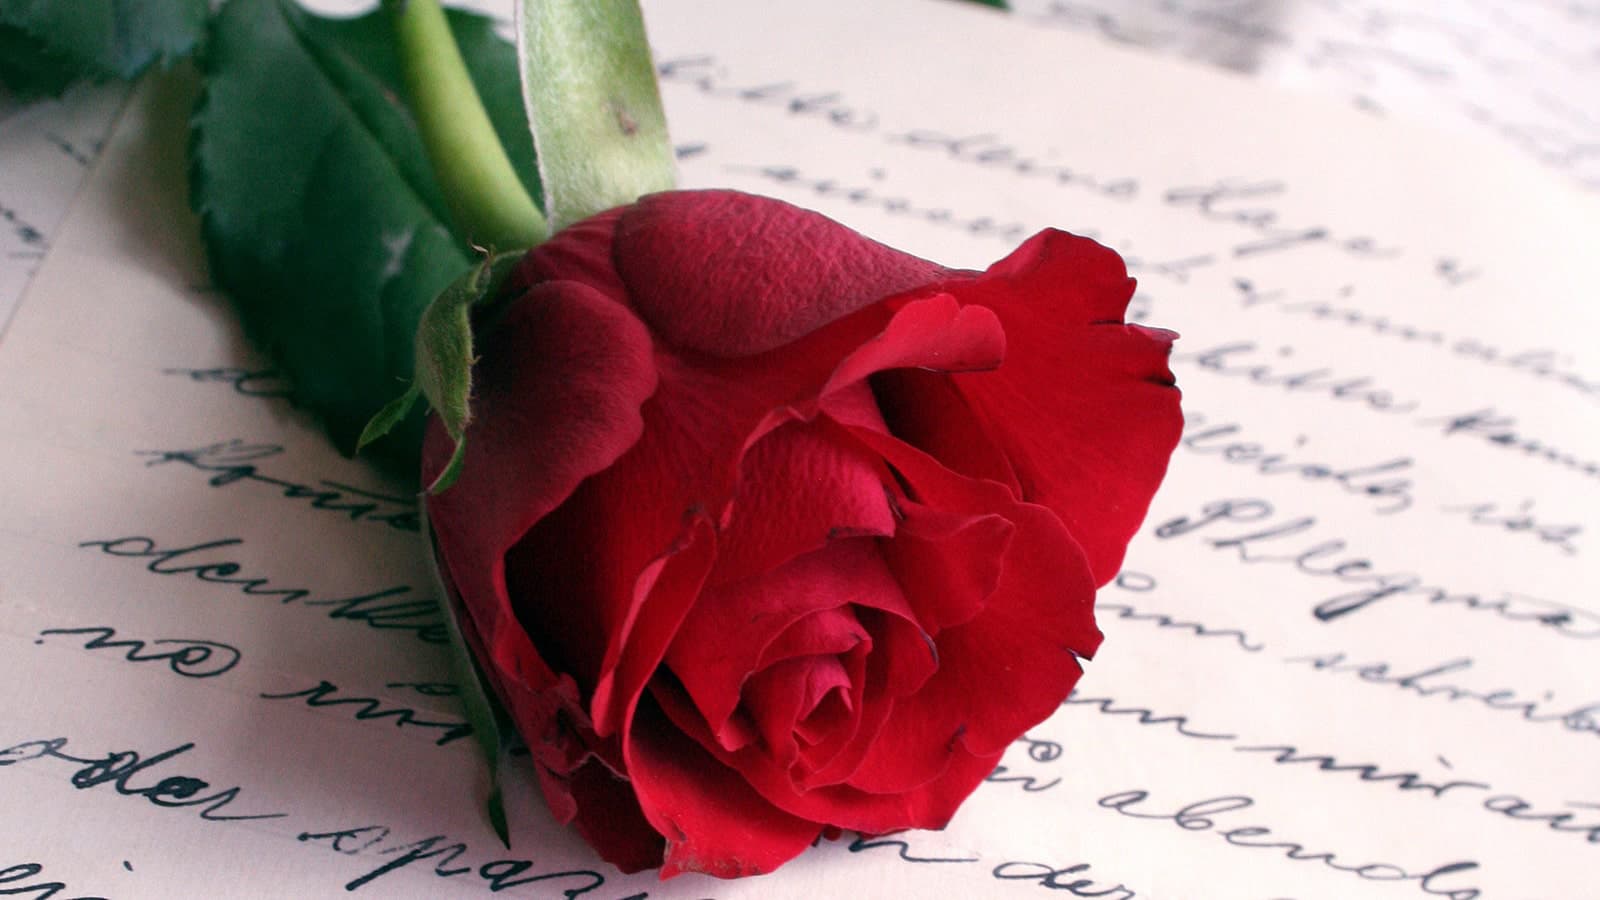 Rose laid on a love poem